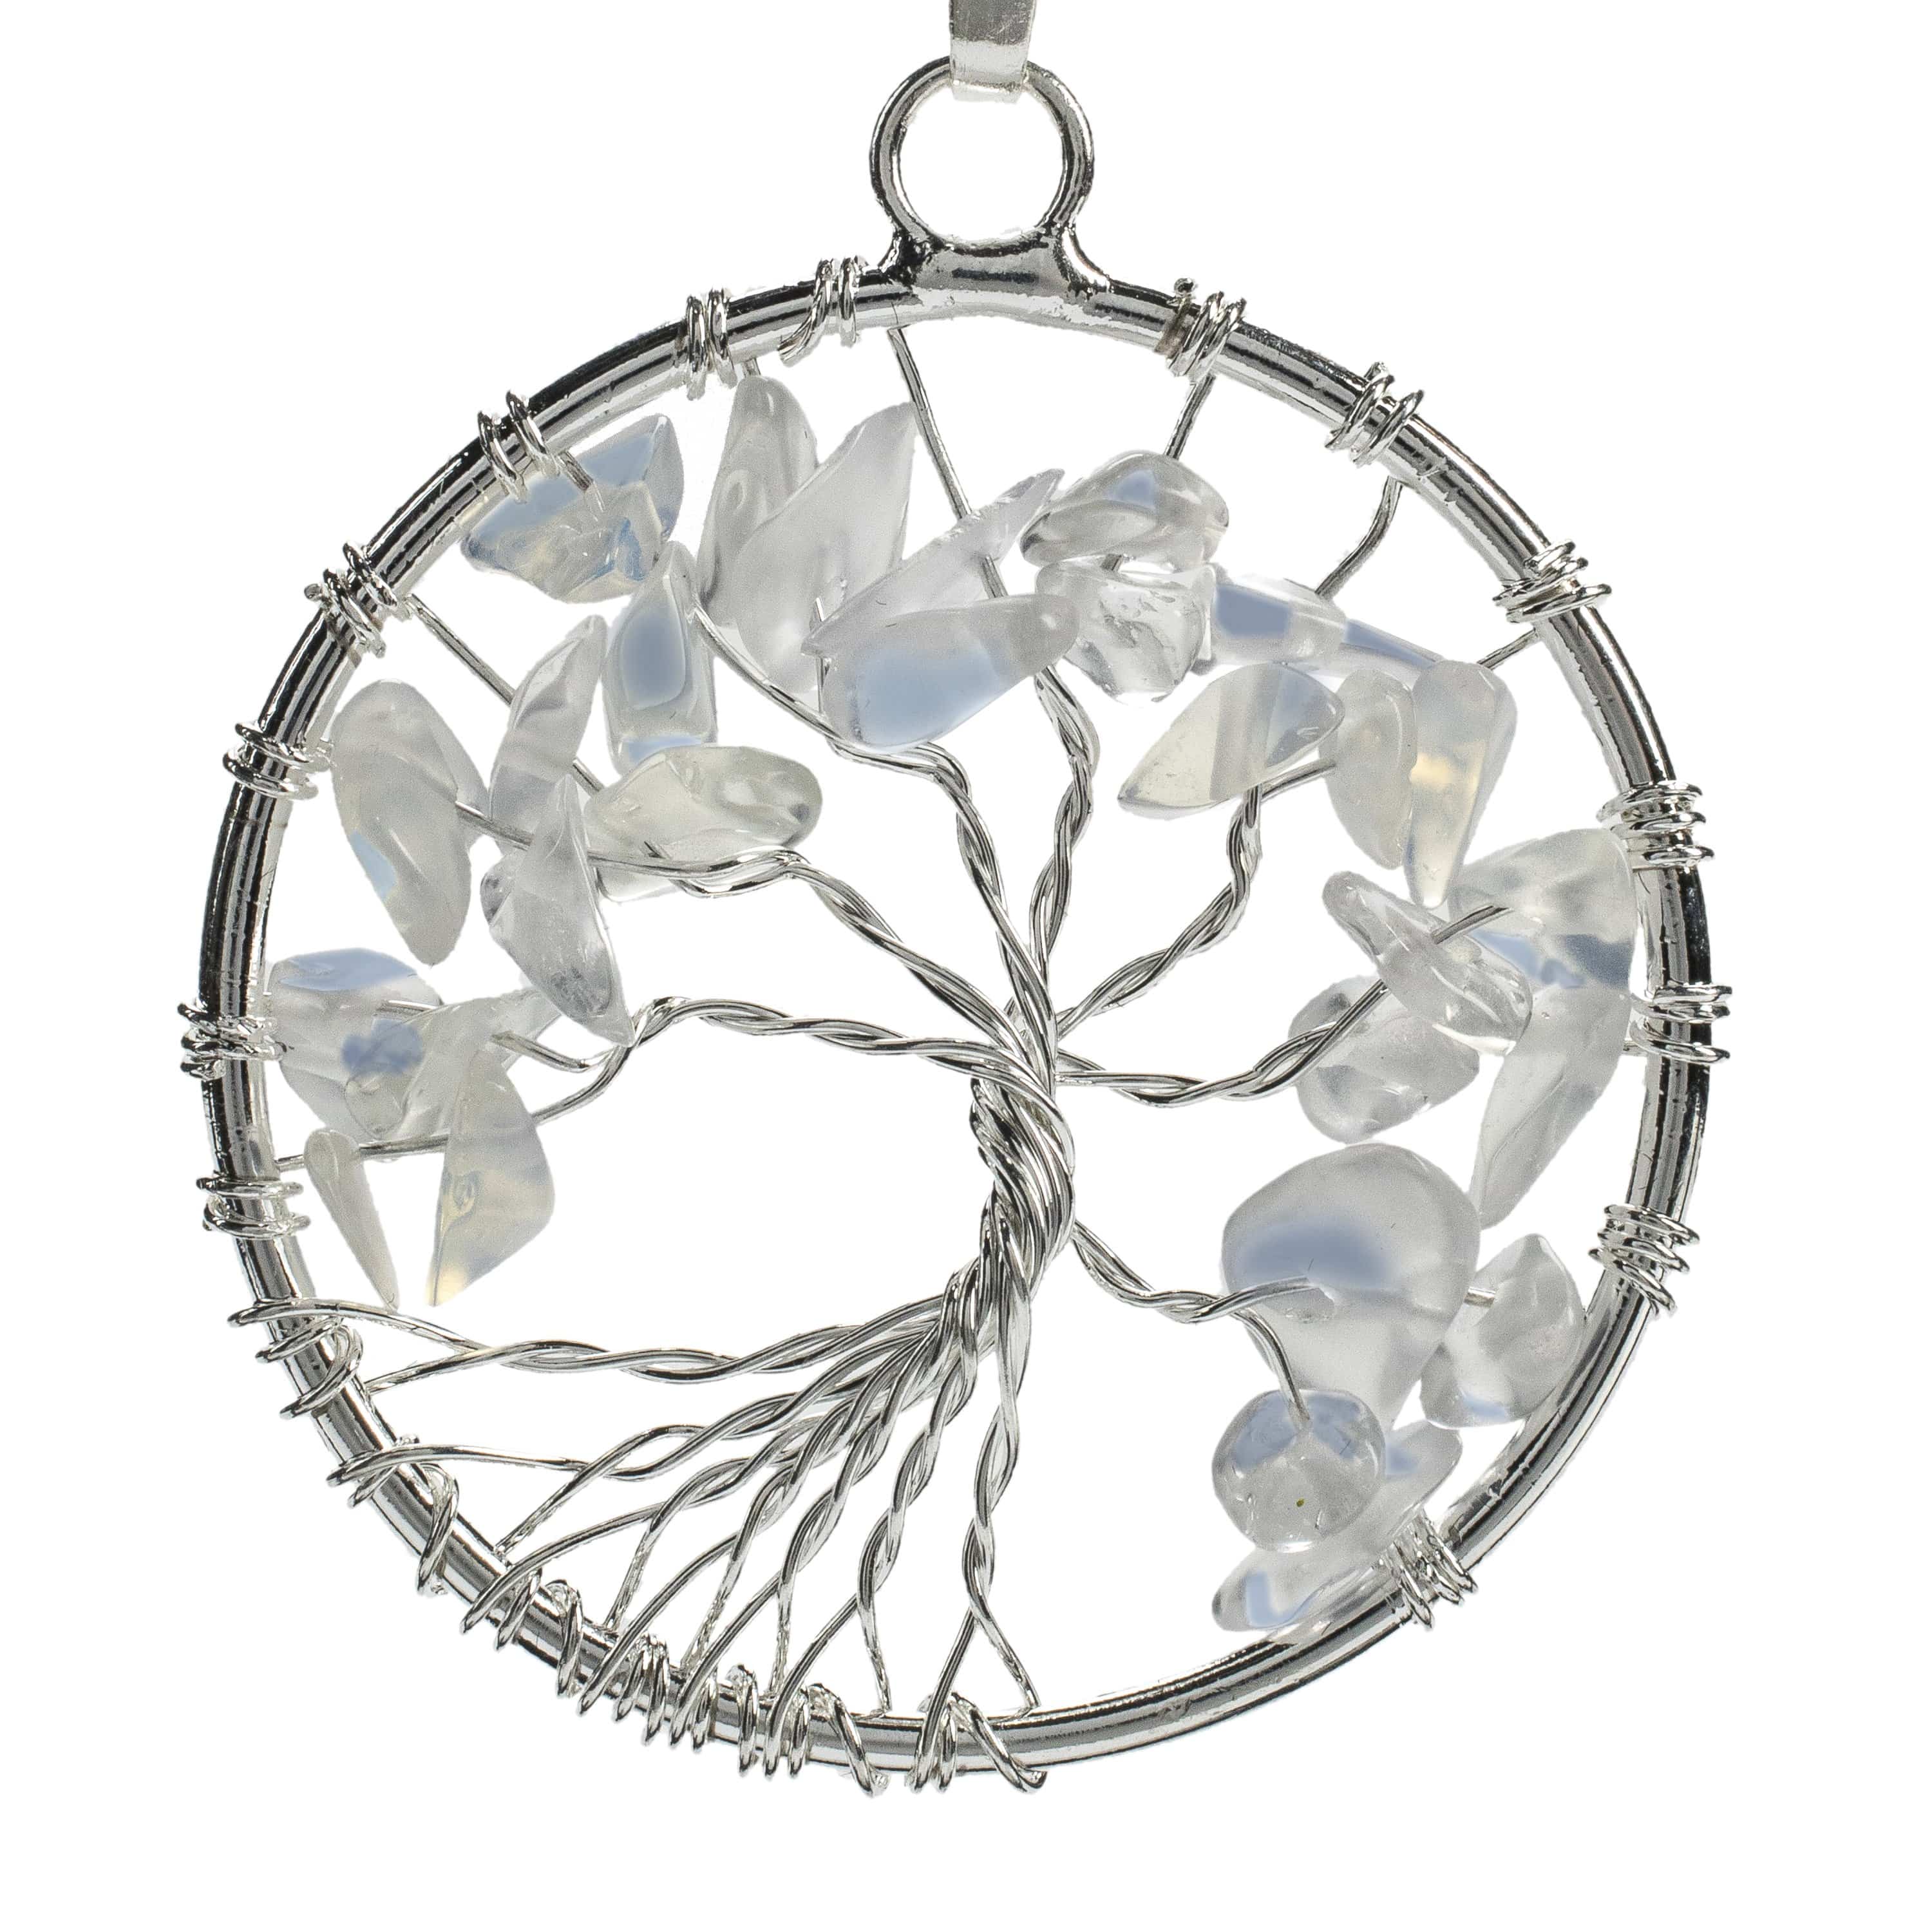 Kalifano Crystal Jewelry Moonstone Chakra Gemstone Tree Necklace & Stainless Steel Chain CJCN20-MS